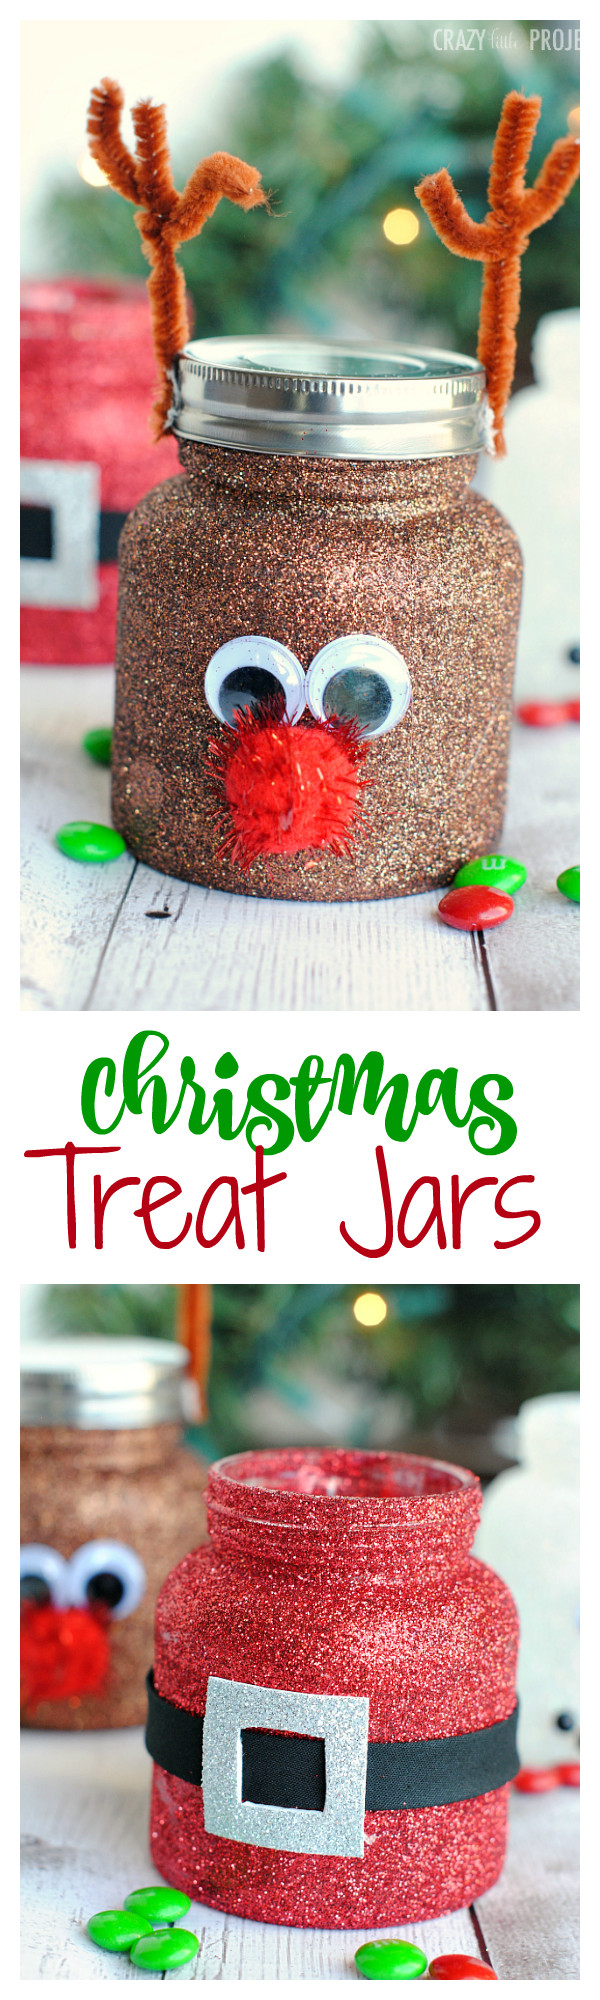 Craft For Small Kids
 Christmas Treat Jars Cute Mason Jar Crafts for Kids